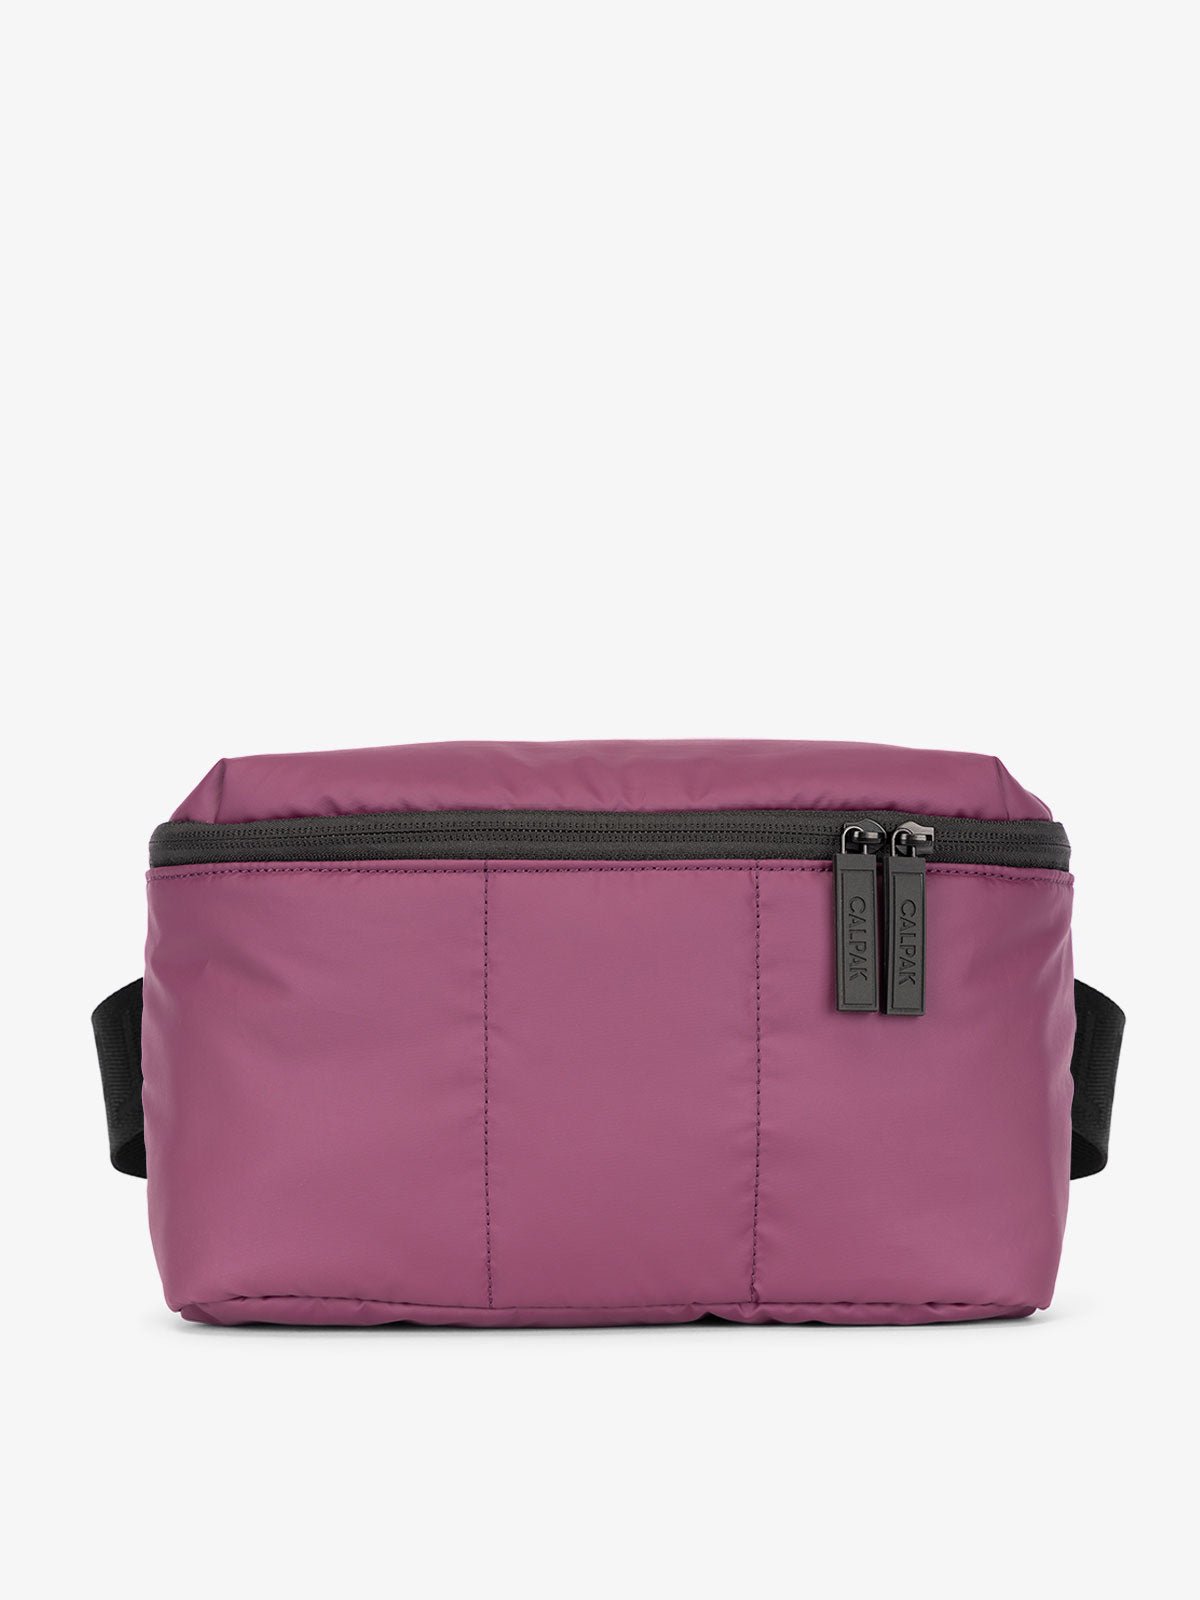 CALPAK Luka Belt Bag with soft puffy exterior in purple plum